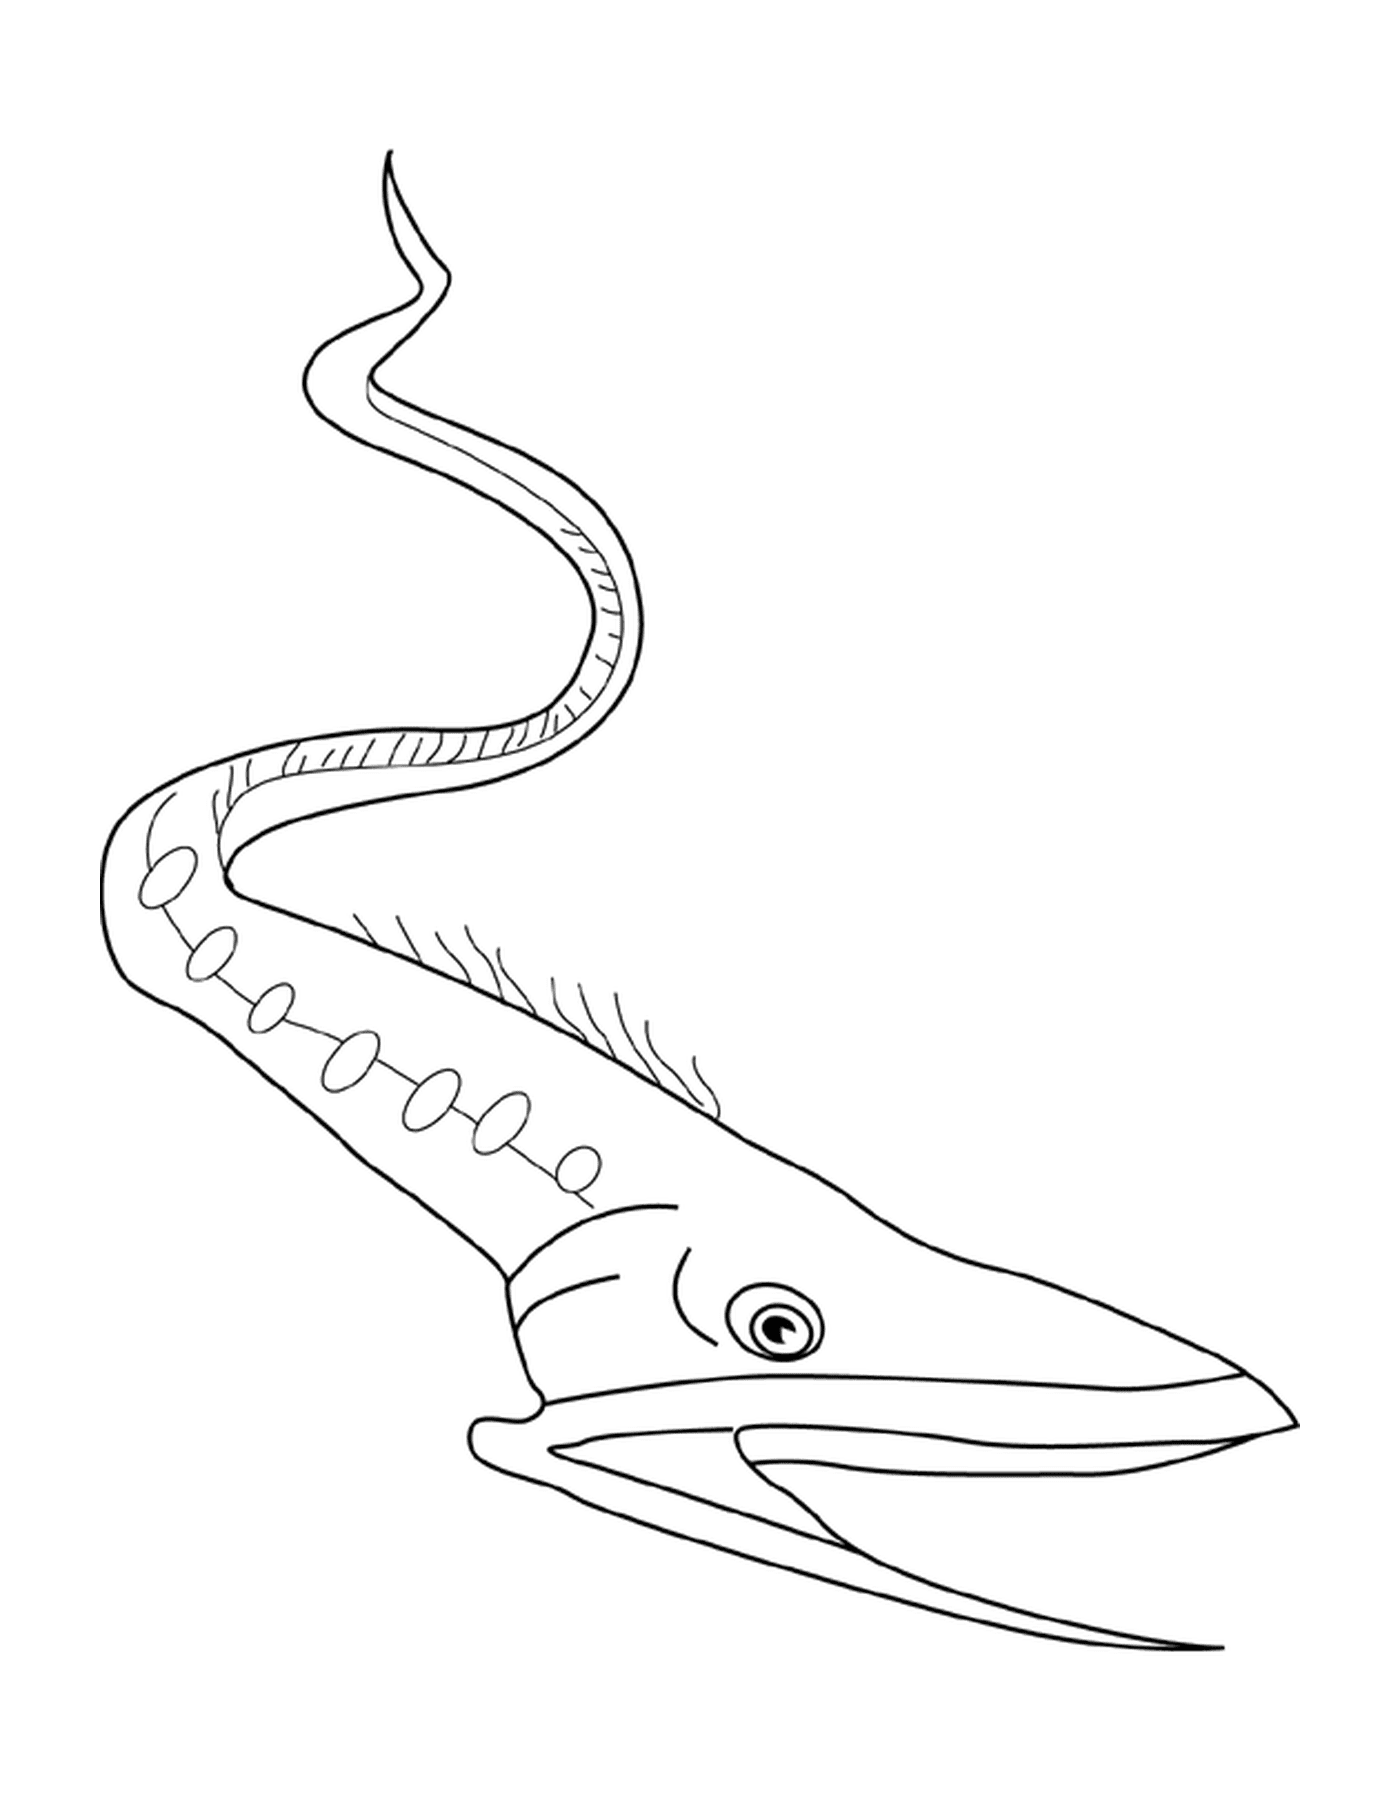  Gulper eel resembling a fish 